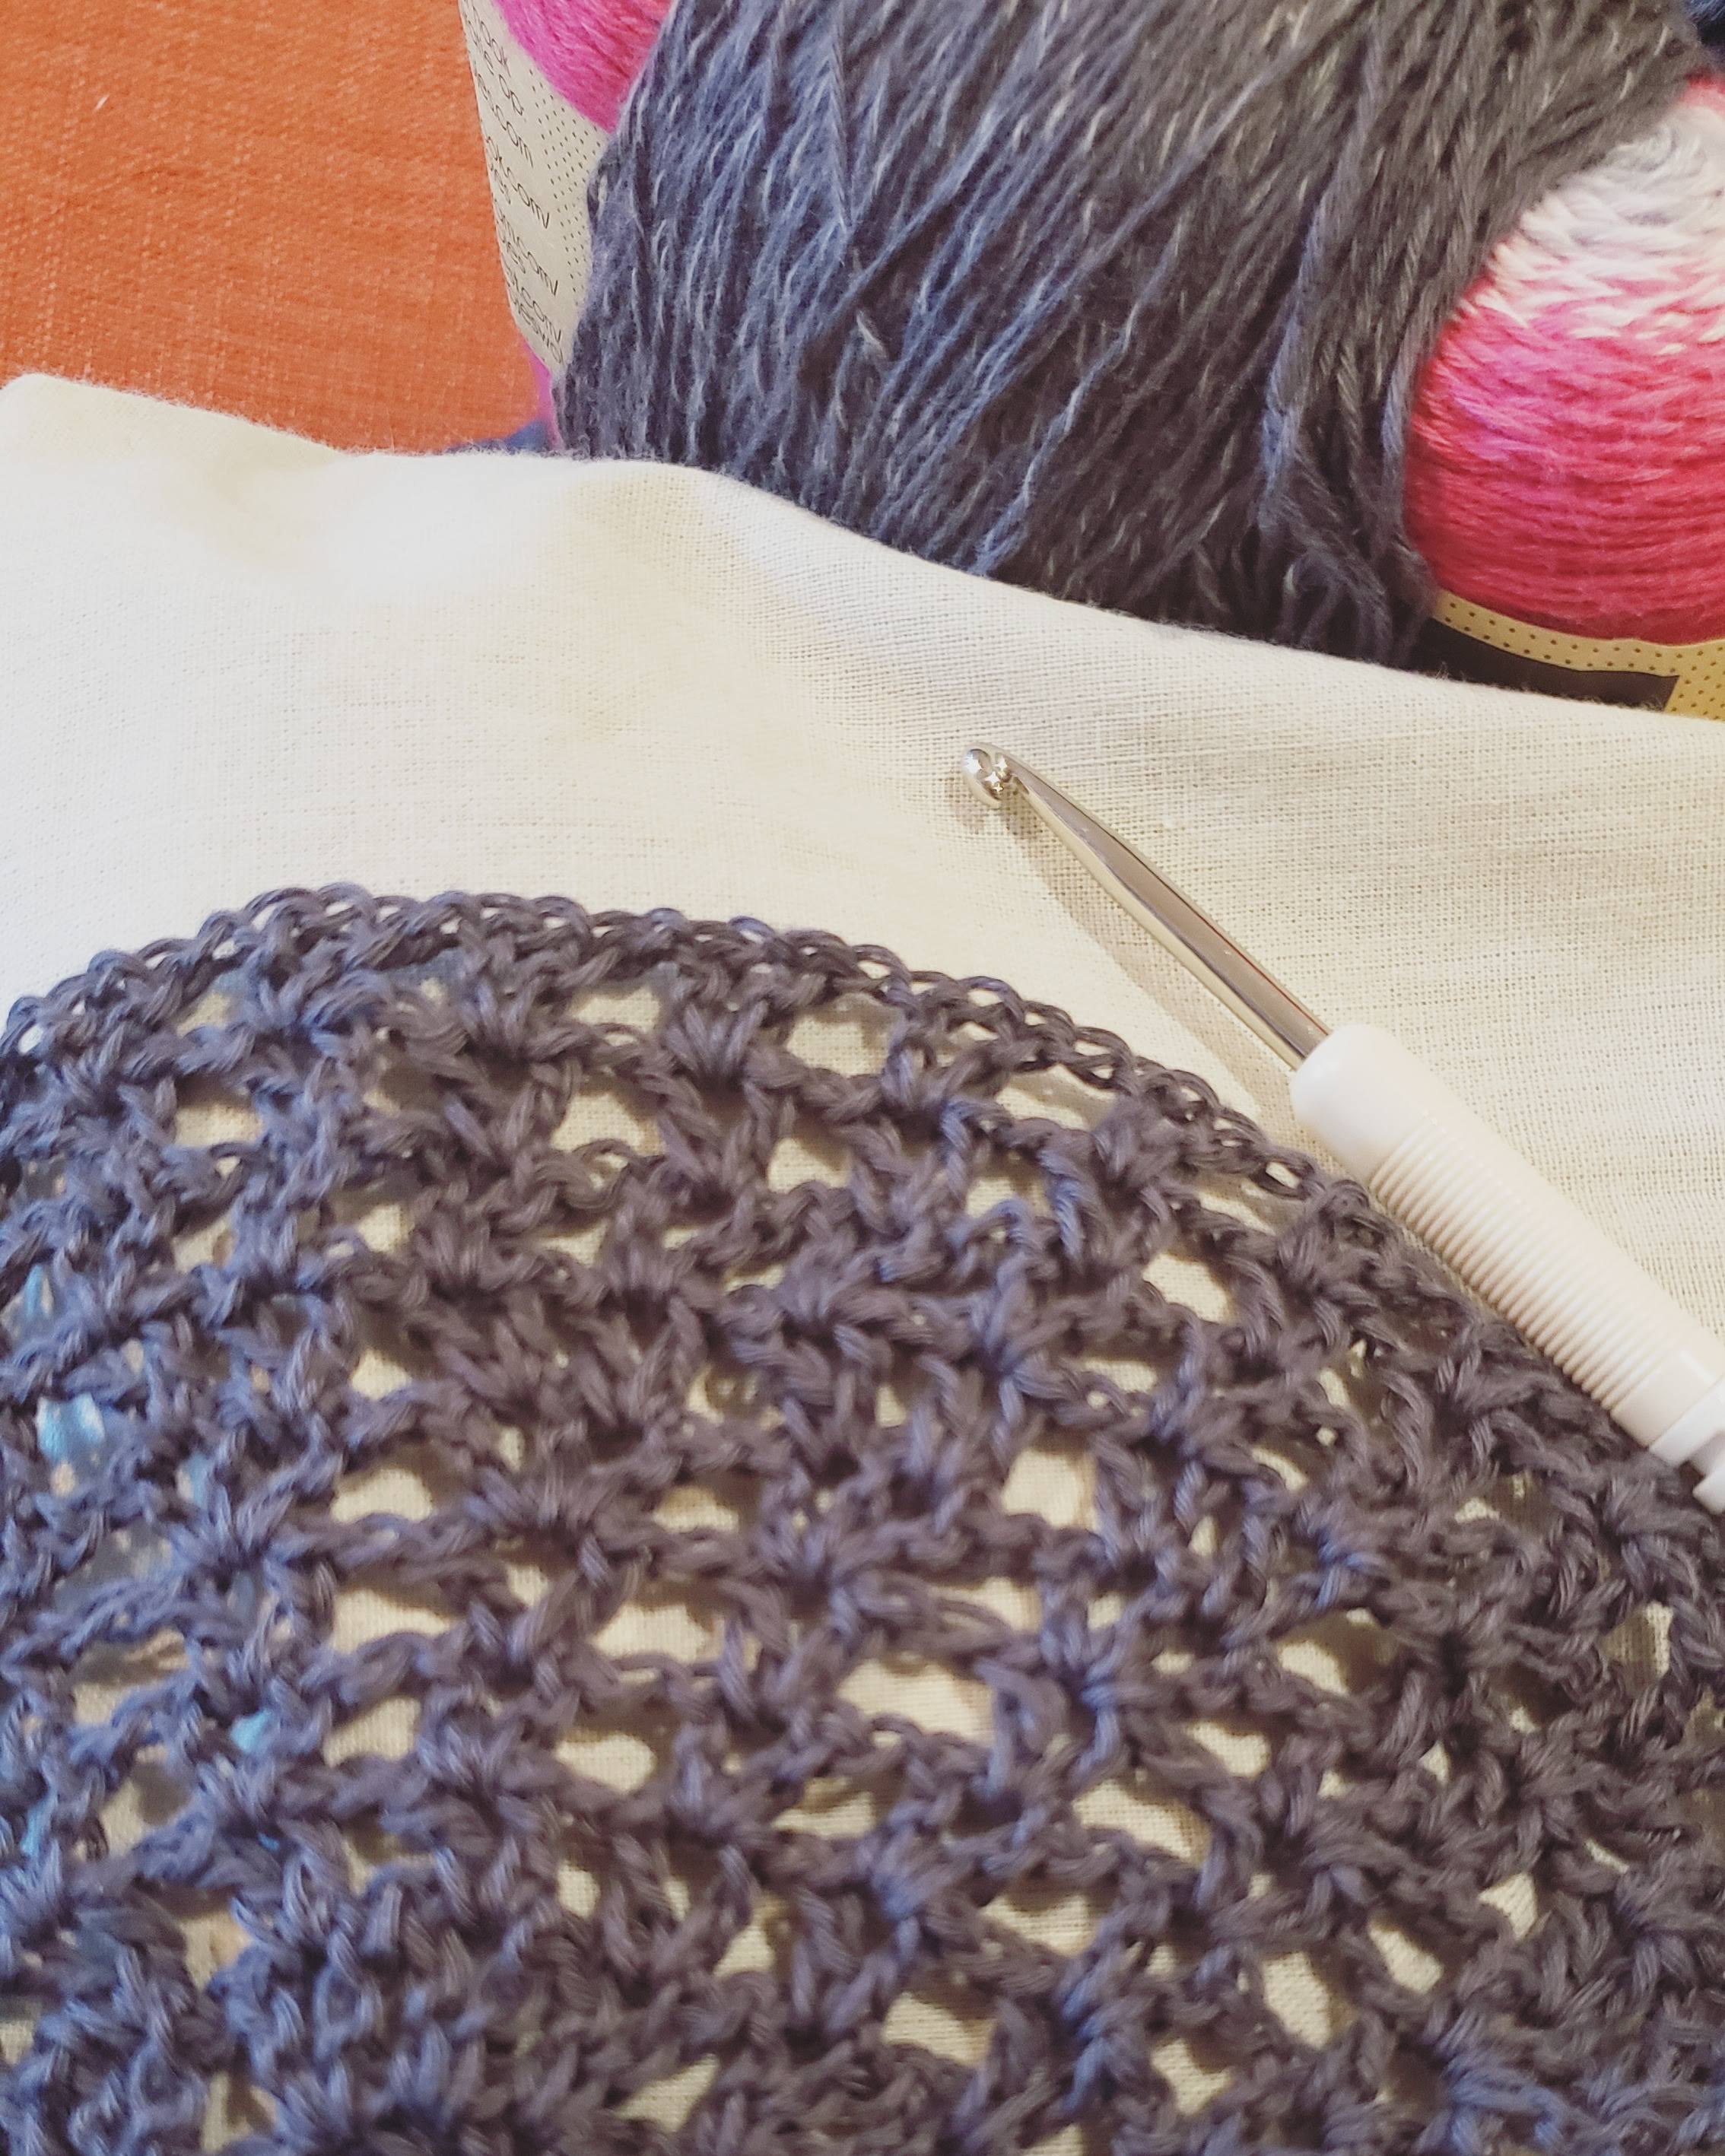 Photo of crocheted pi shawl in progress